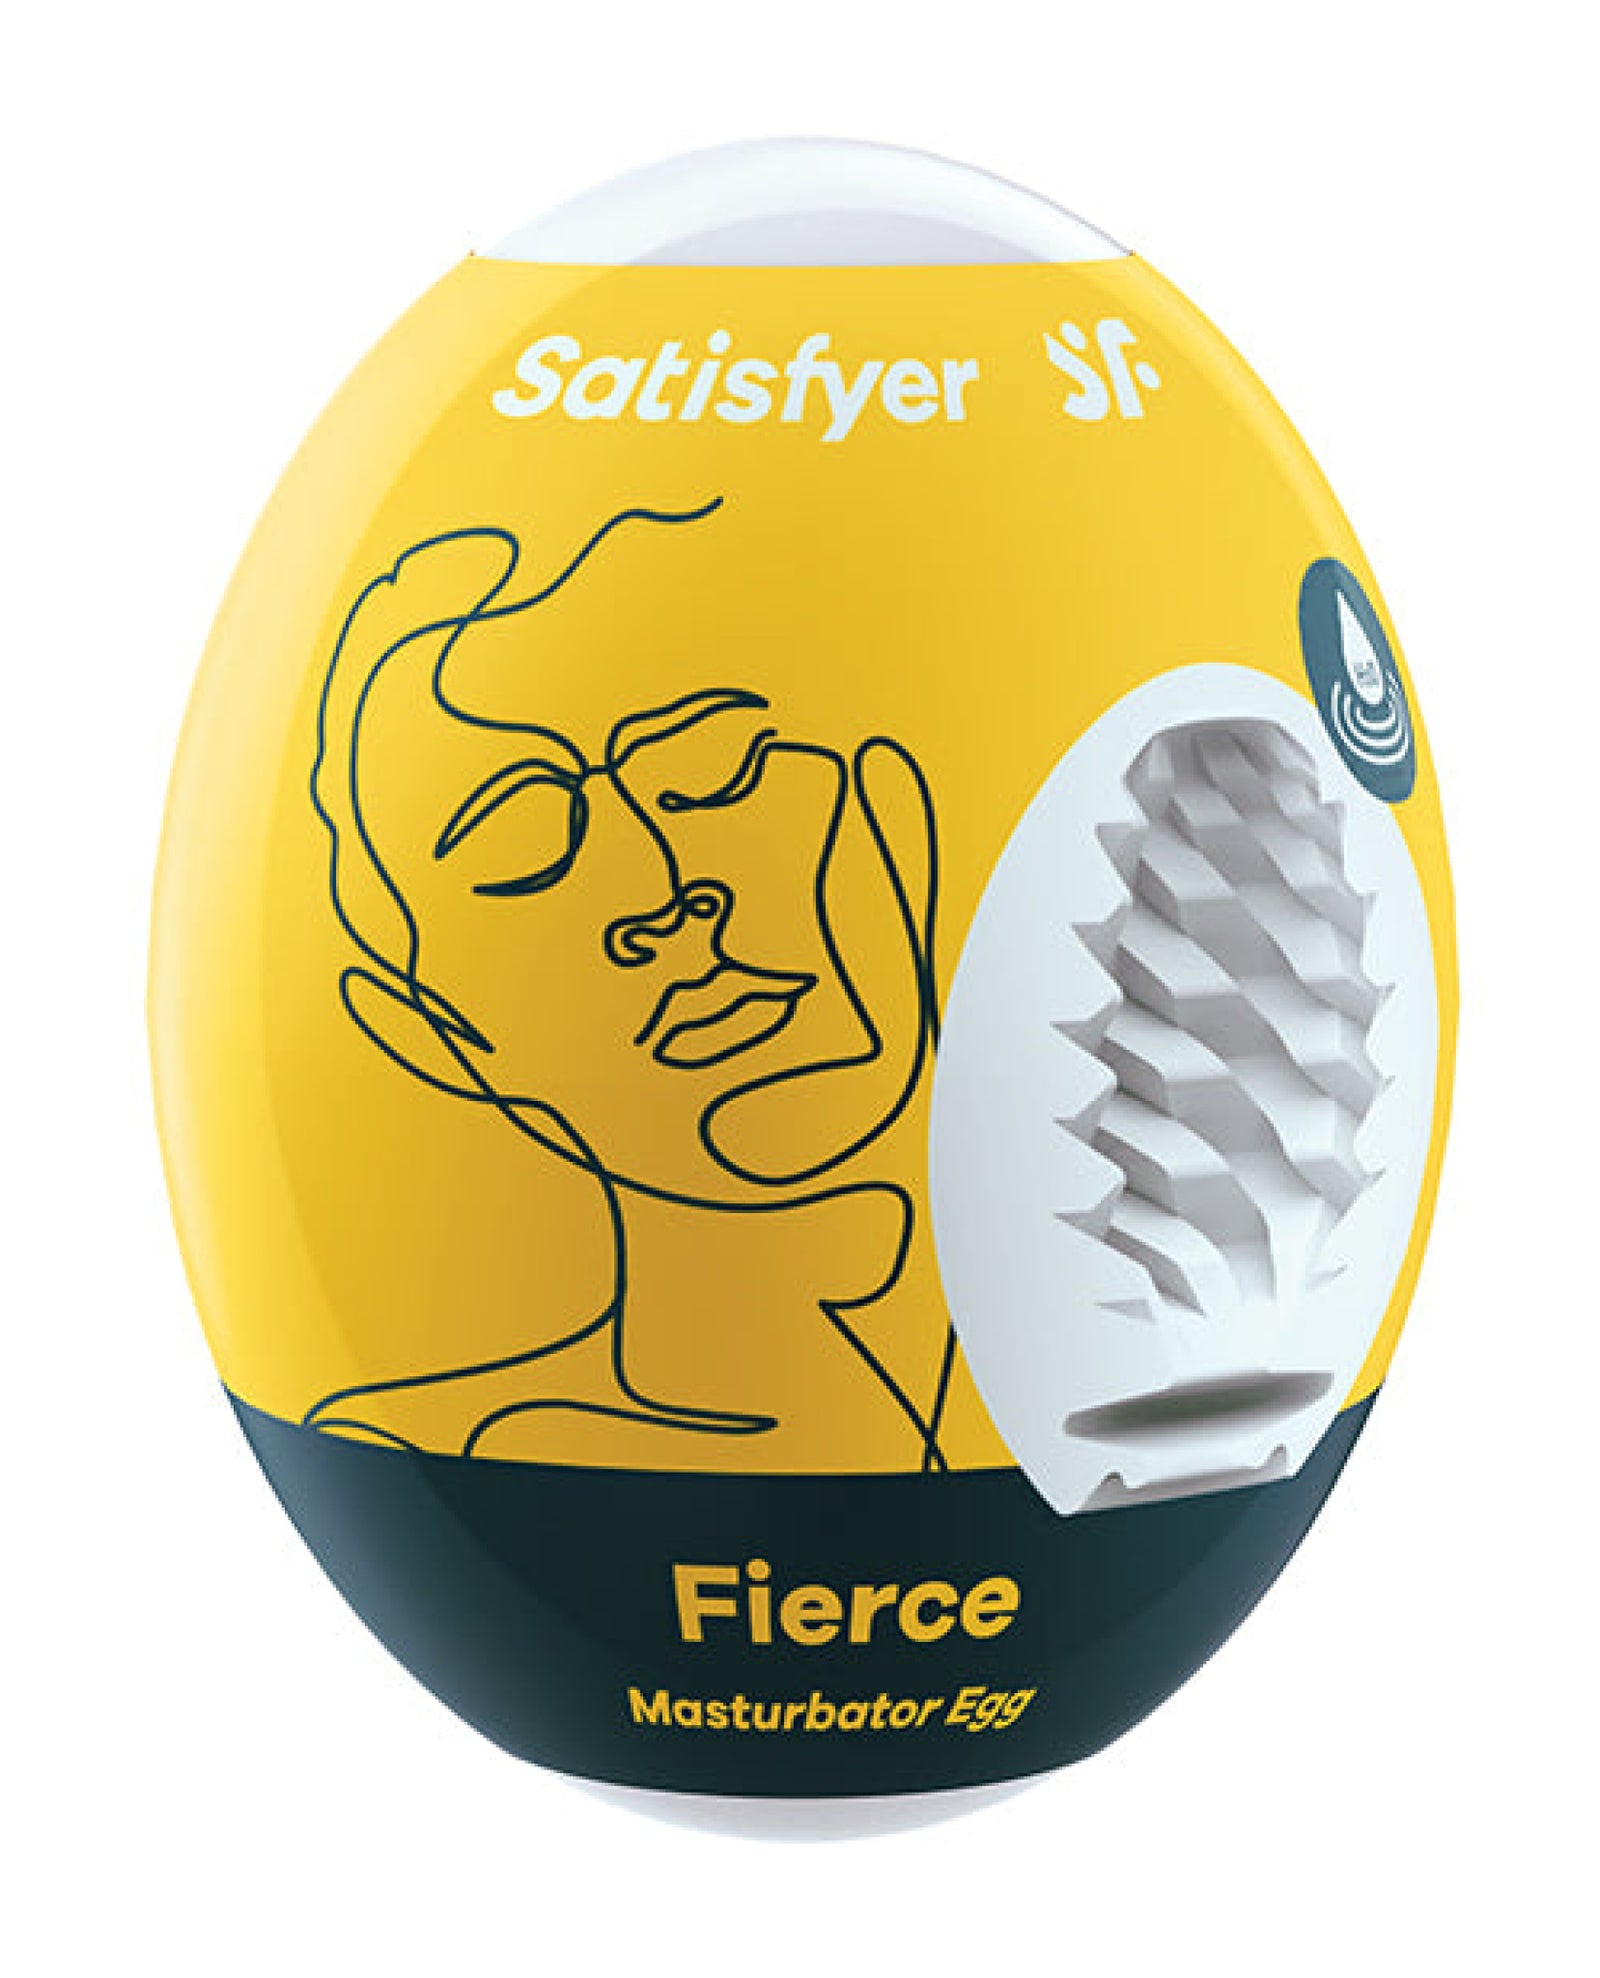 Satisfyer Masturbator Egg - Fierce Satisfyer®